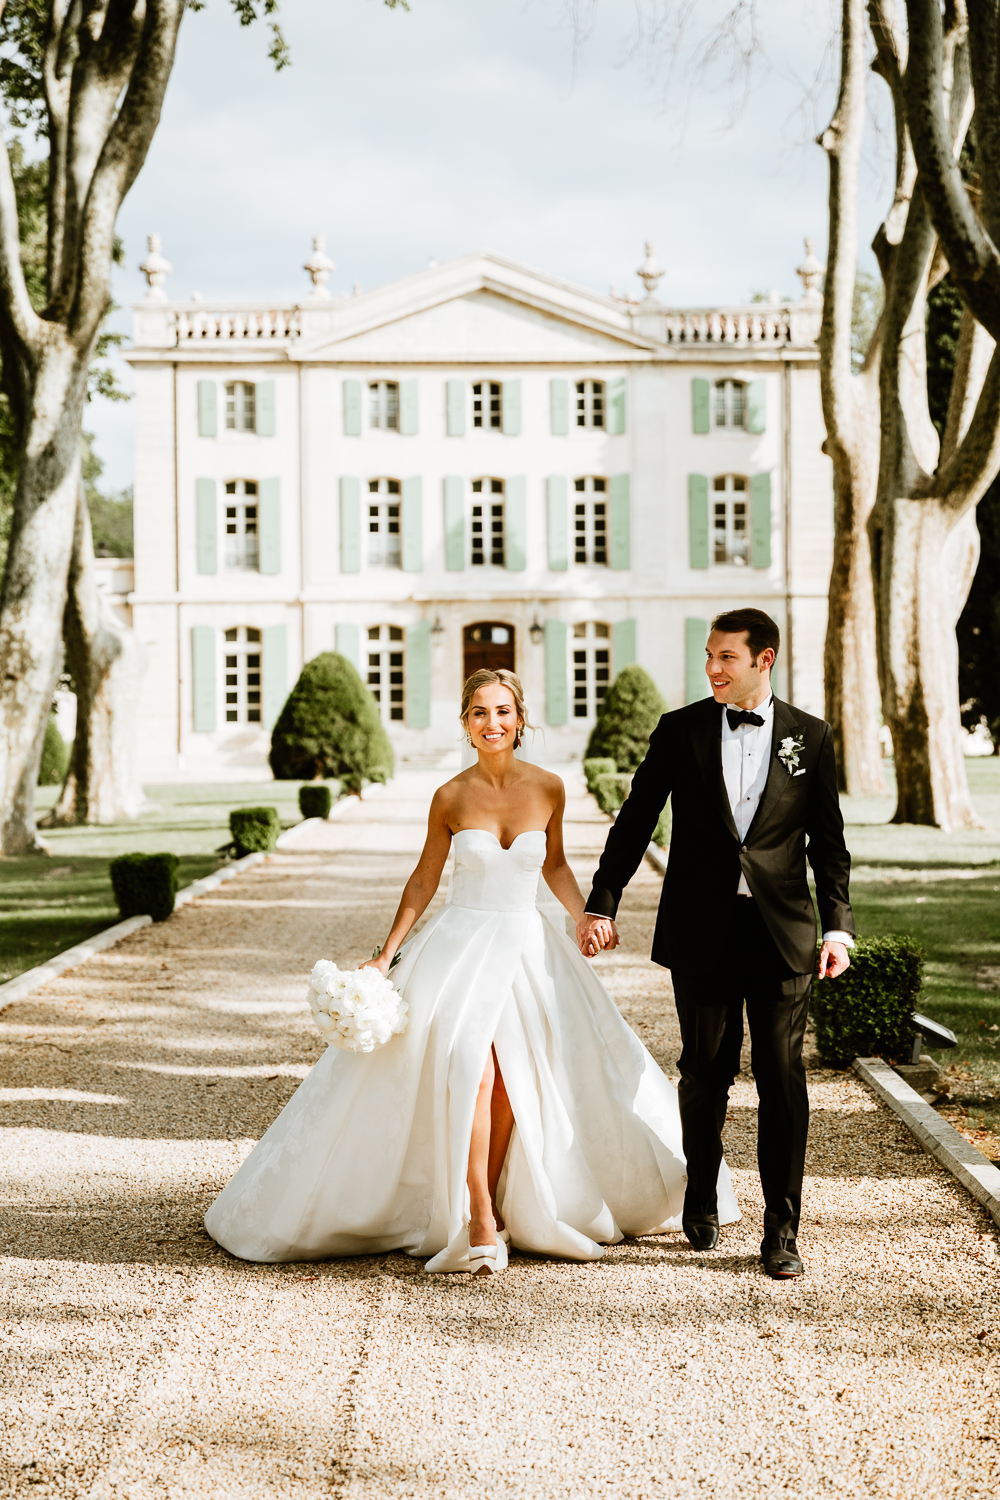 Mariage au Château de Tourreau - Dara + Matt - Blog Mariage Madame C